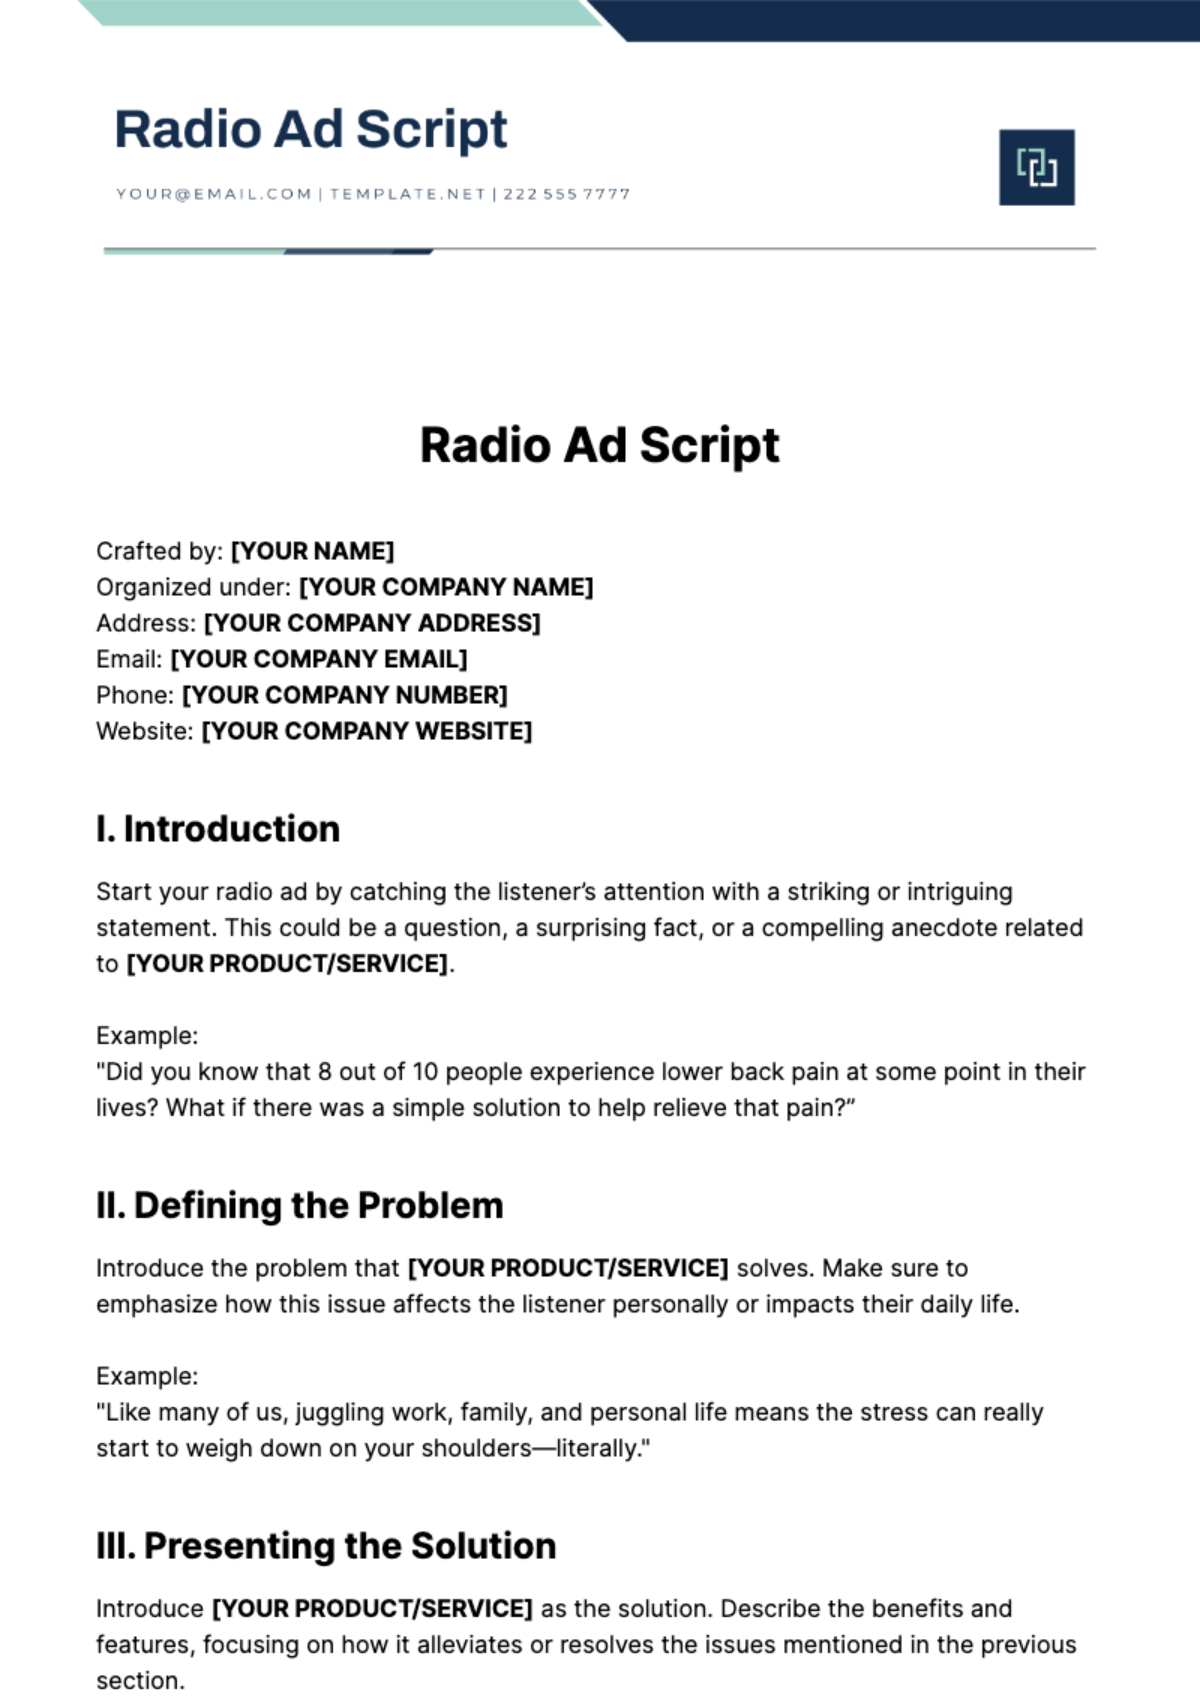 Radio Ad Script Template